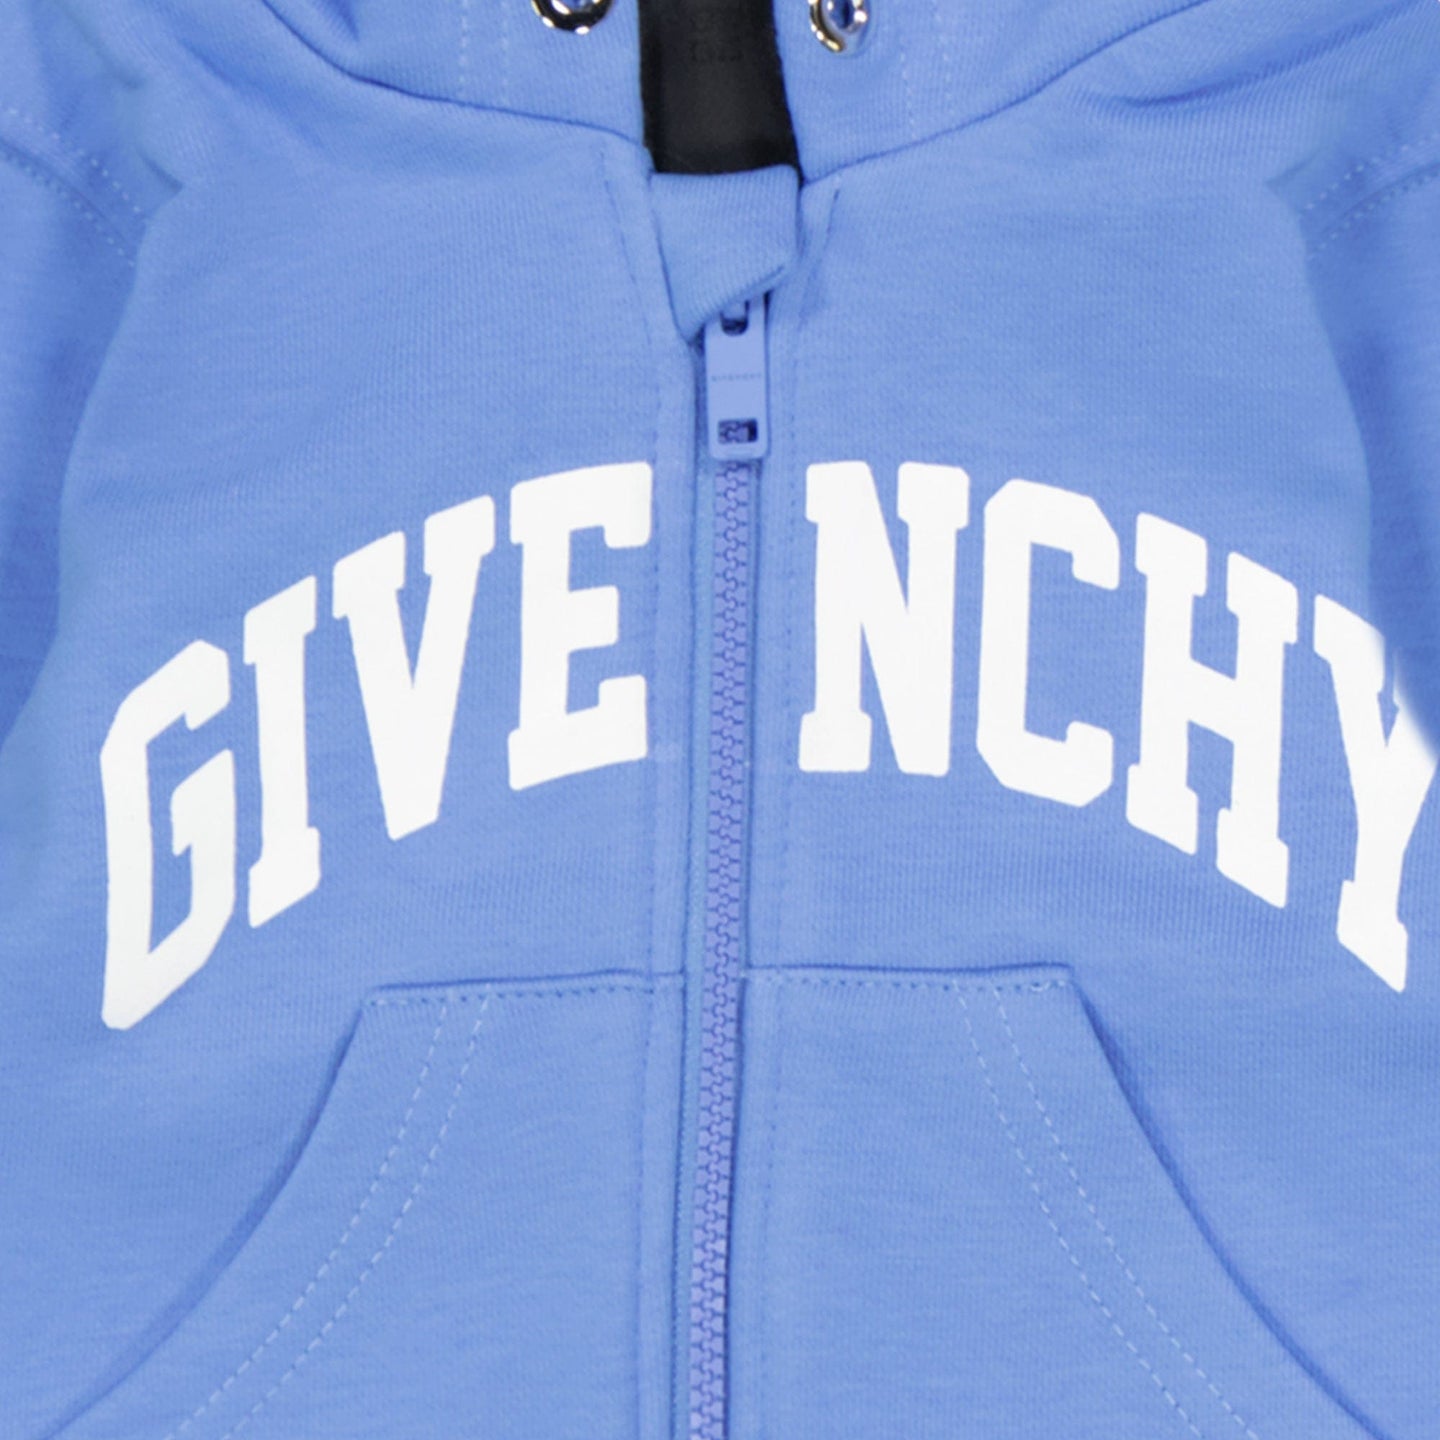 Givenchy Baby Jongens Vest Blauw 6 mnd